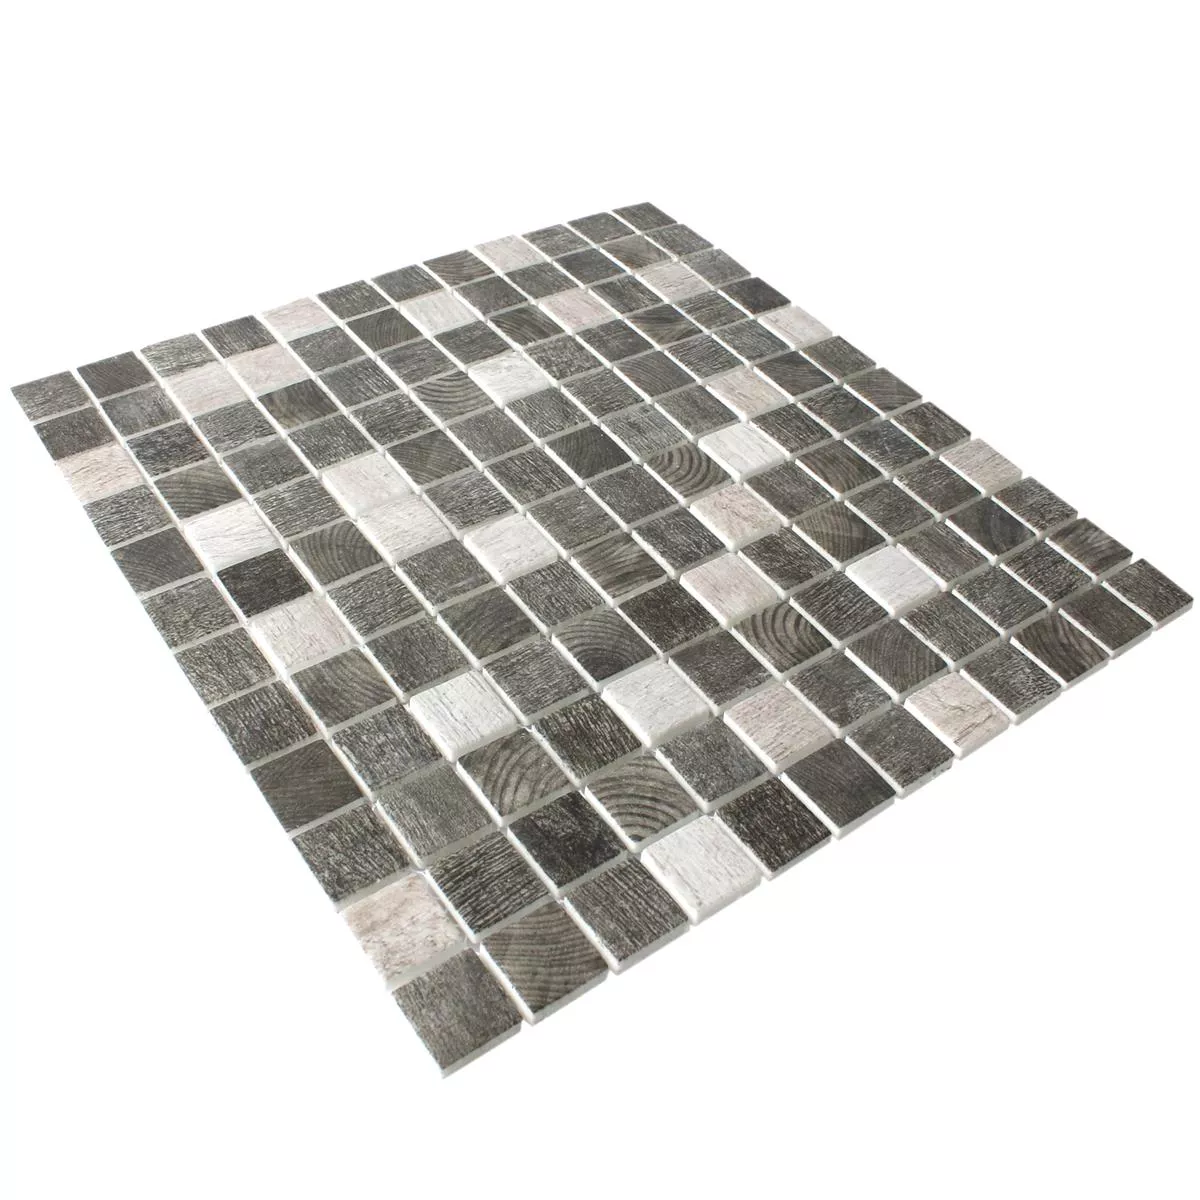 Mosaic Tiles Glass Valetta Wood Structure Grey